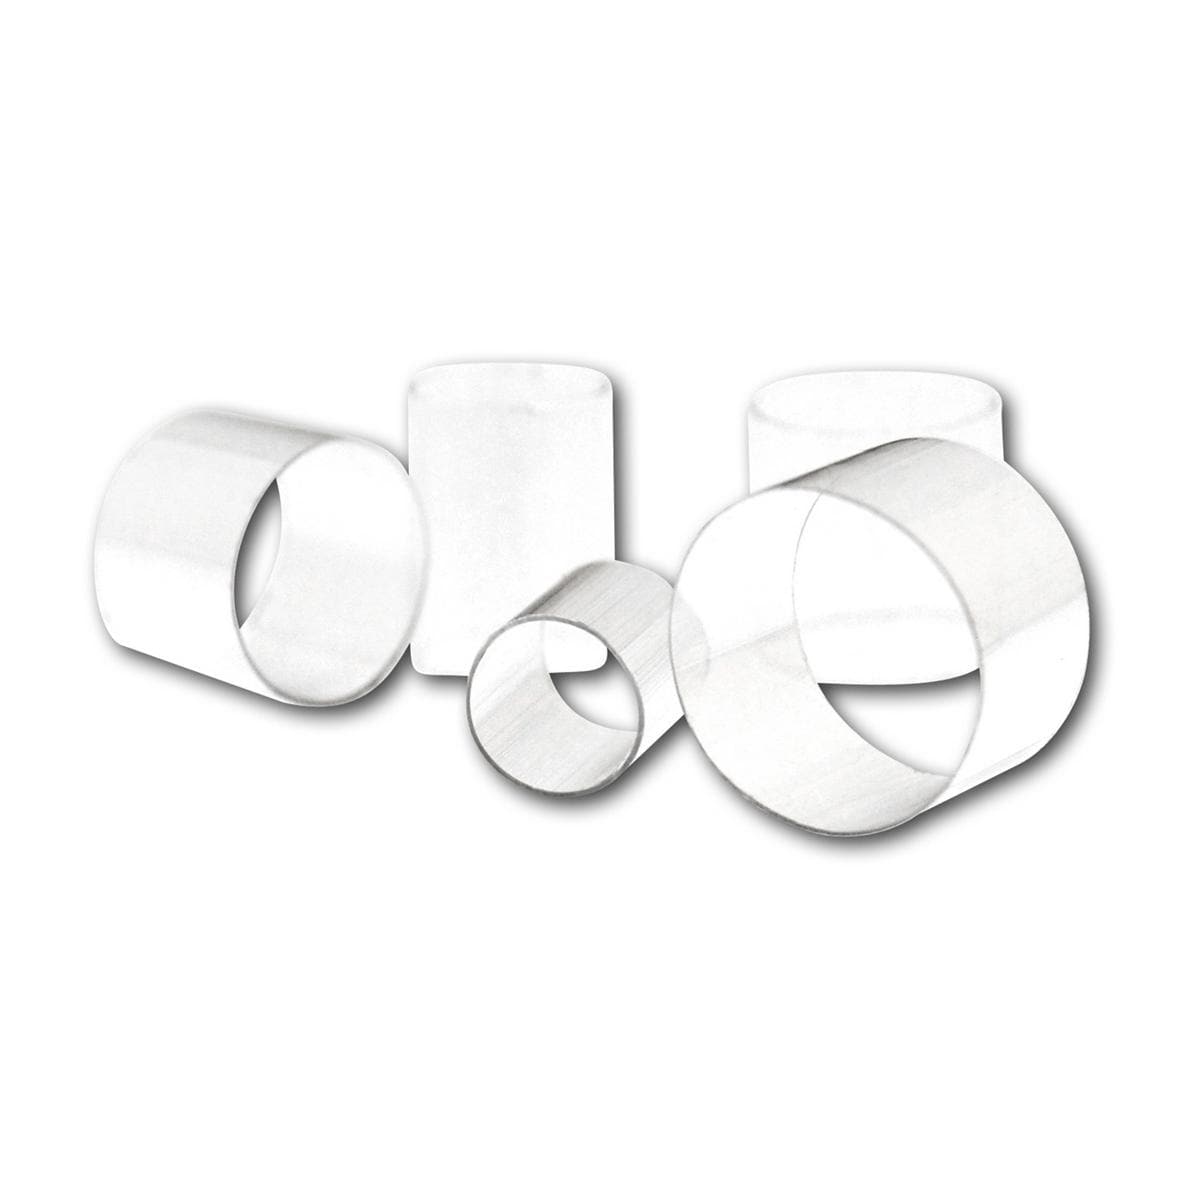 Transparent Ringe - Nachfüllpackung - Nr. 18, Packung 12 Stück